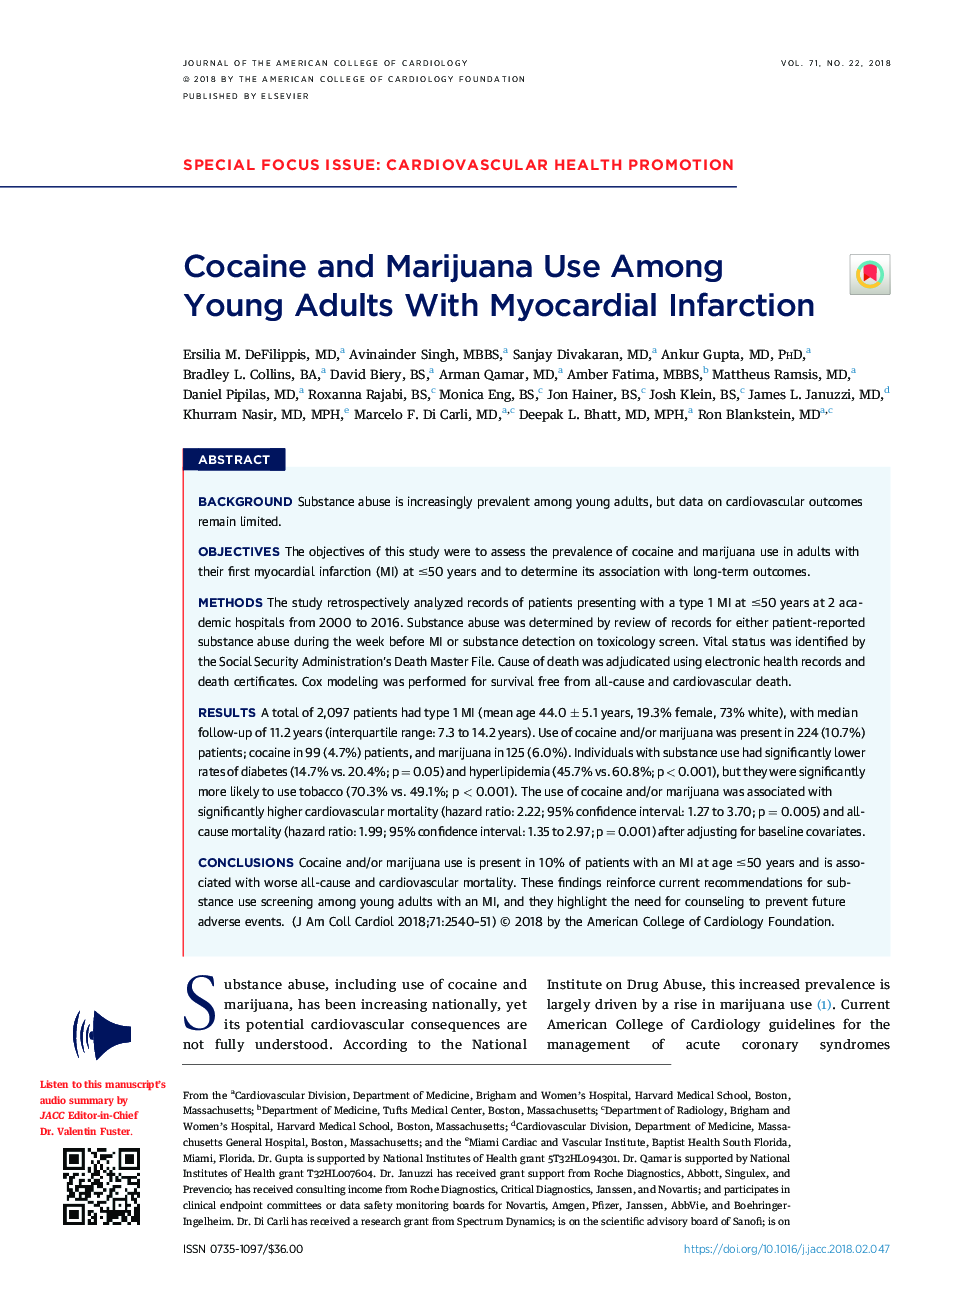 Cocaine and Marijuana Use Among YoungÂ Adults With Myocardial Infarction